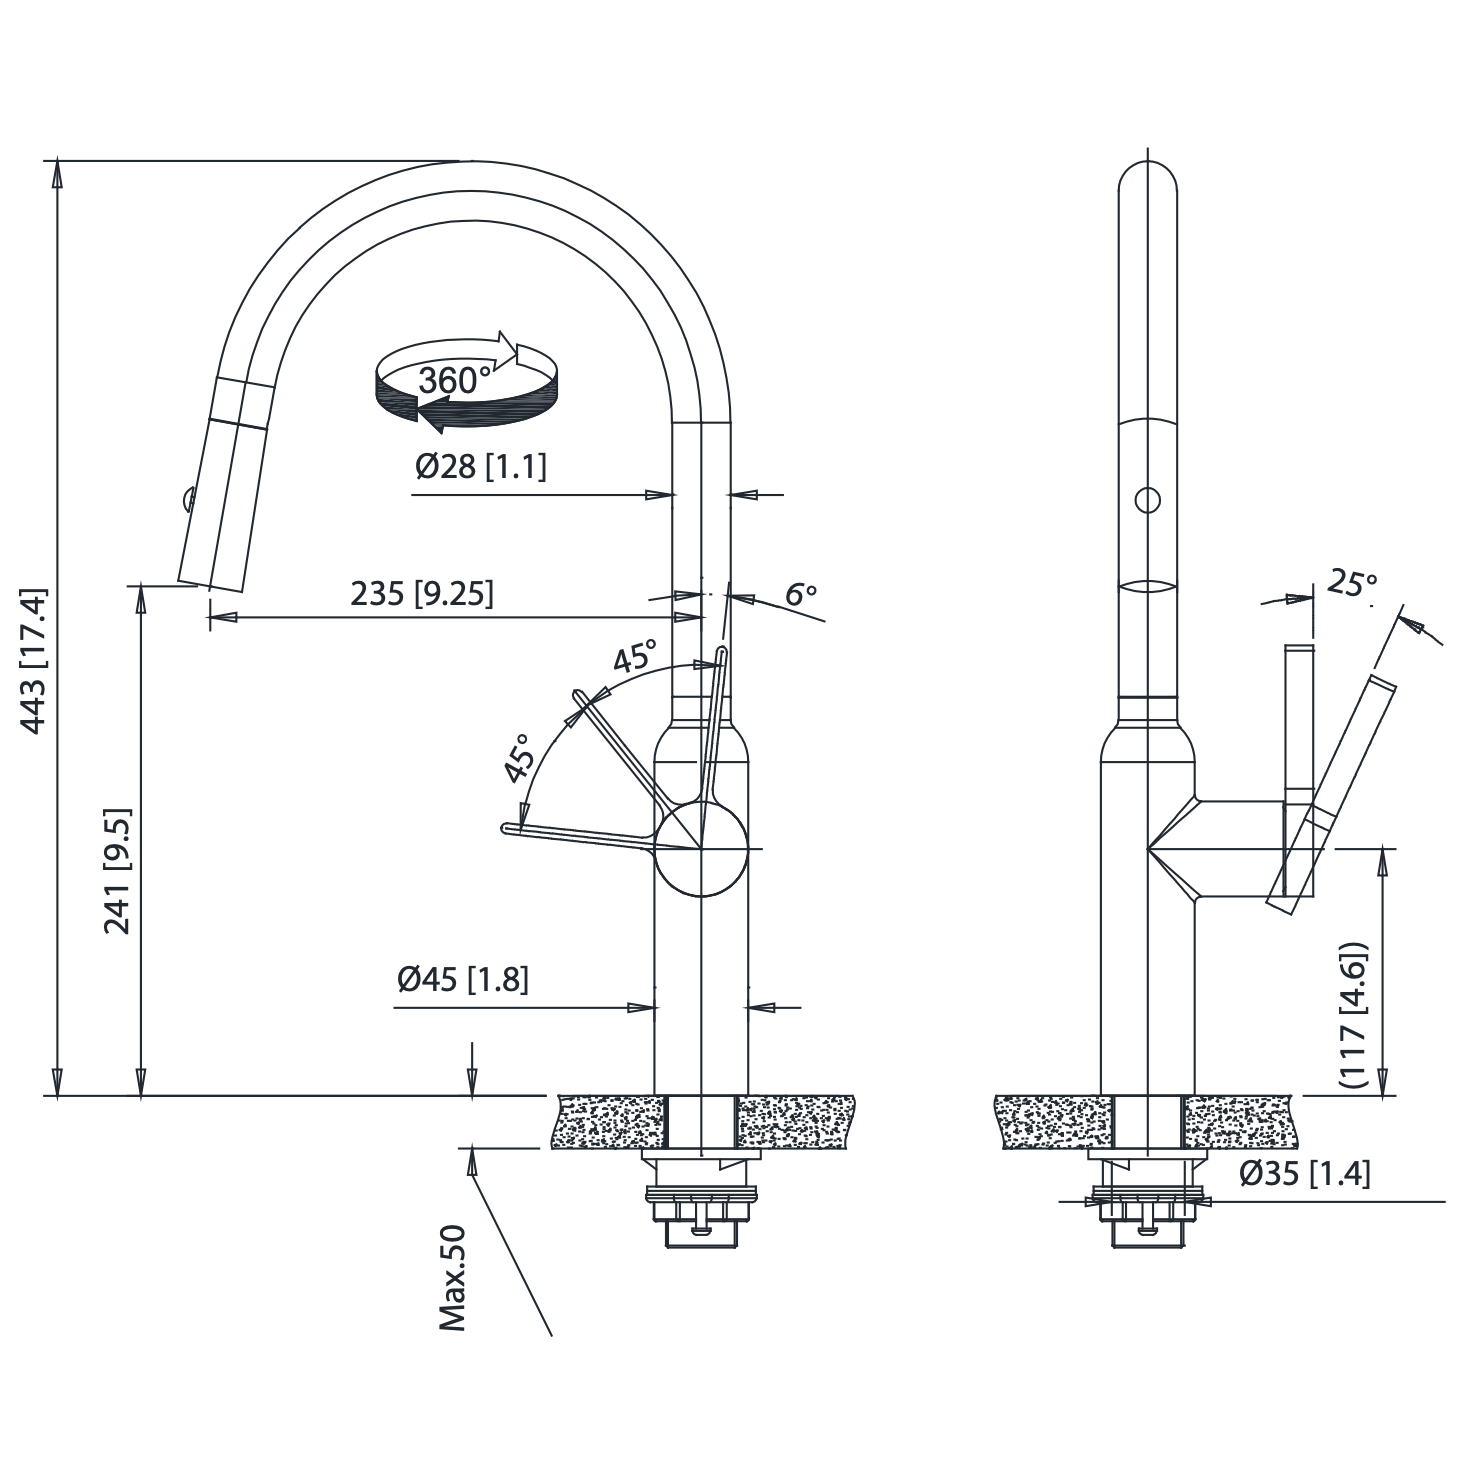 Isenberg Klassiker Ziel 17" Single Hole Steel Gray Stainless Steel Pull-Down Kitchen Faucet With Dual Function Sprayer